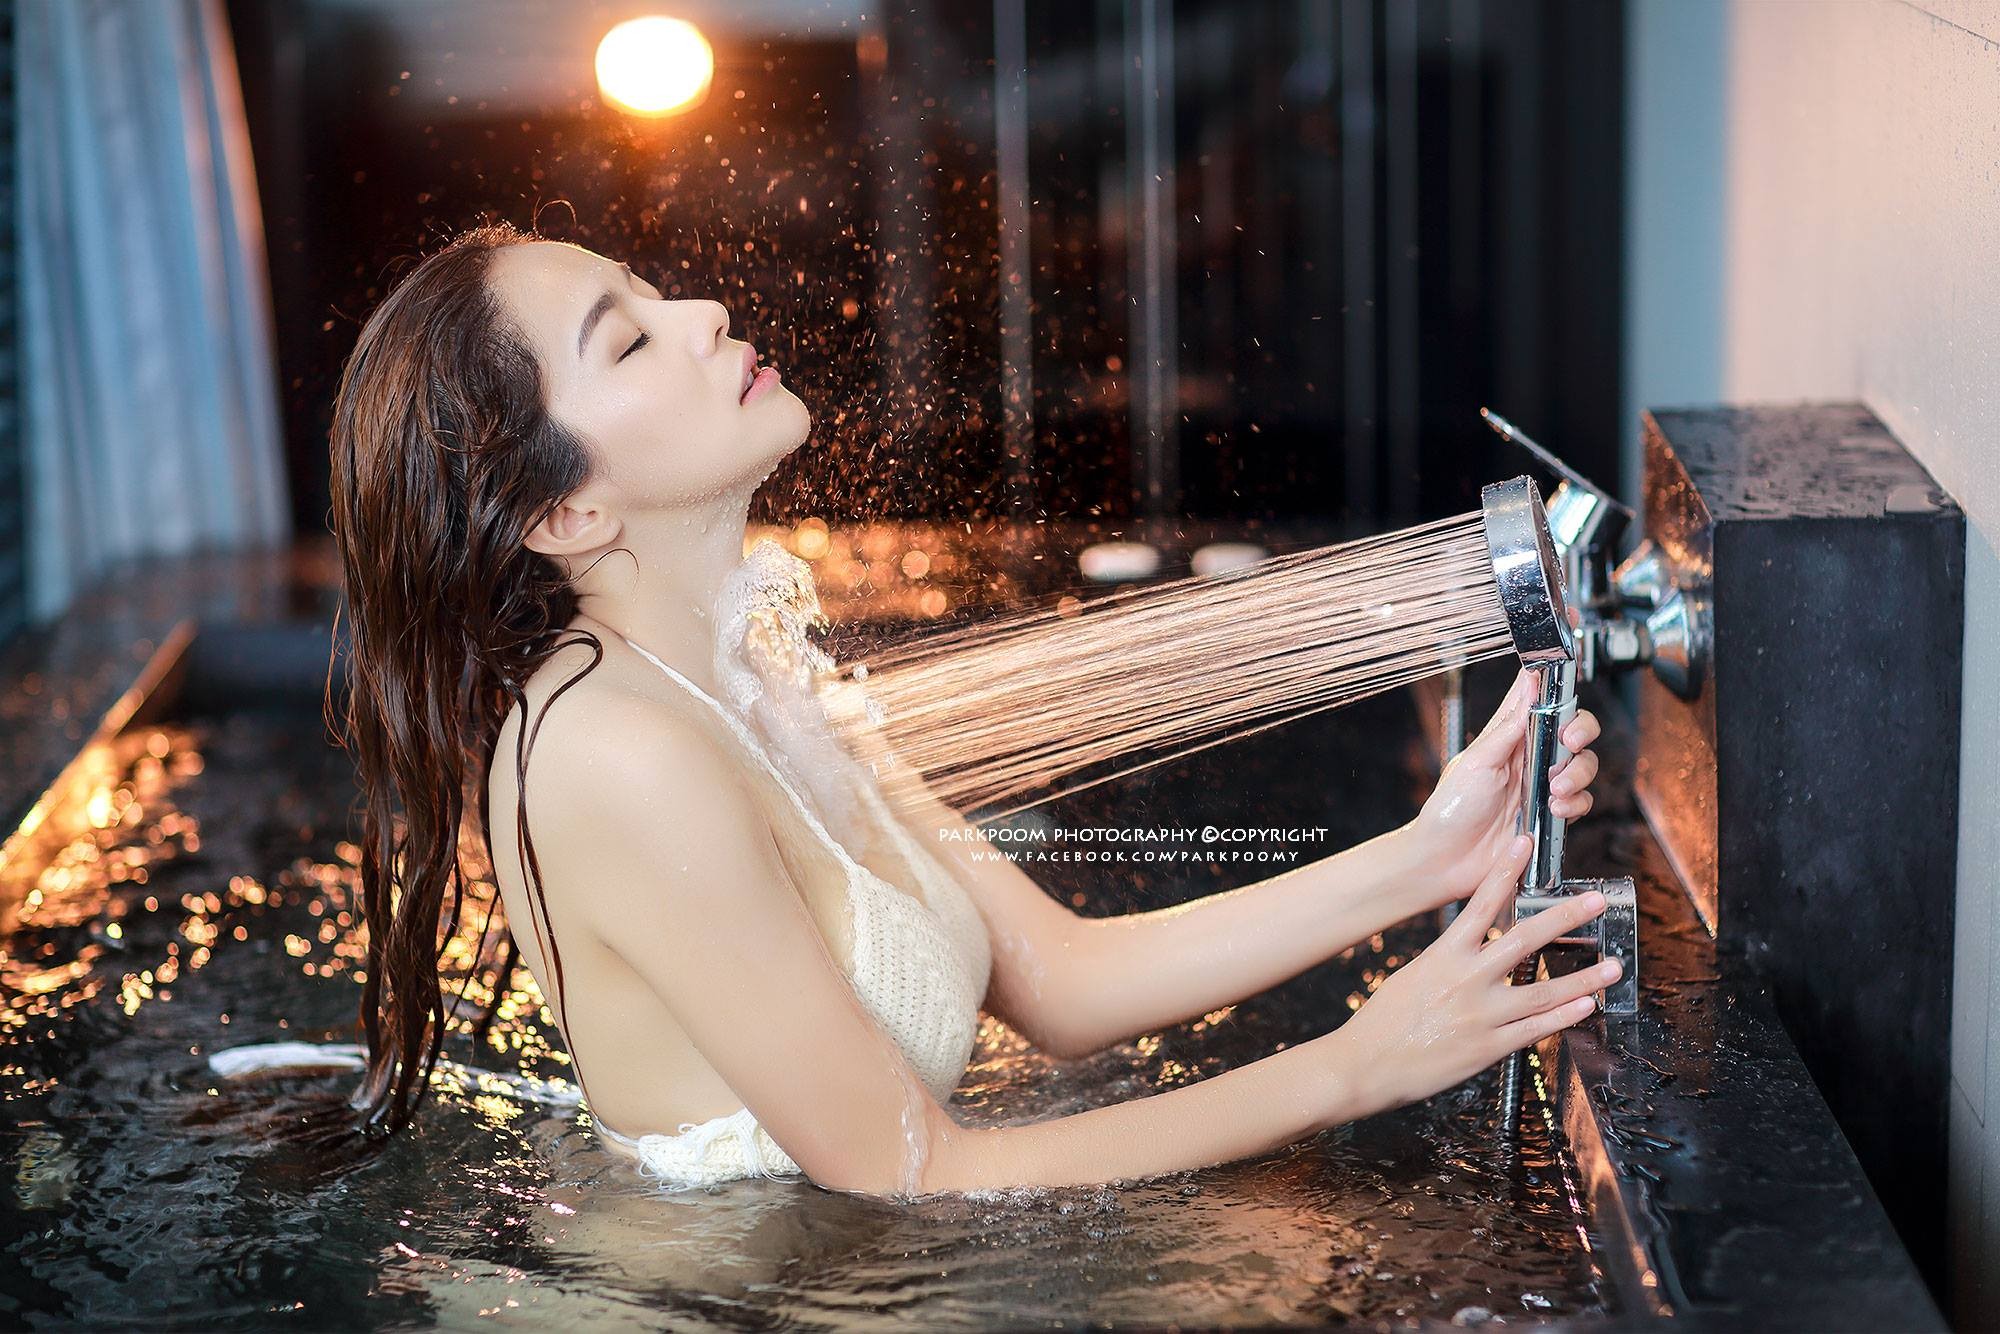 People 2000x1334 Damiran Asian model Thailand women wet body wet hair water drops